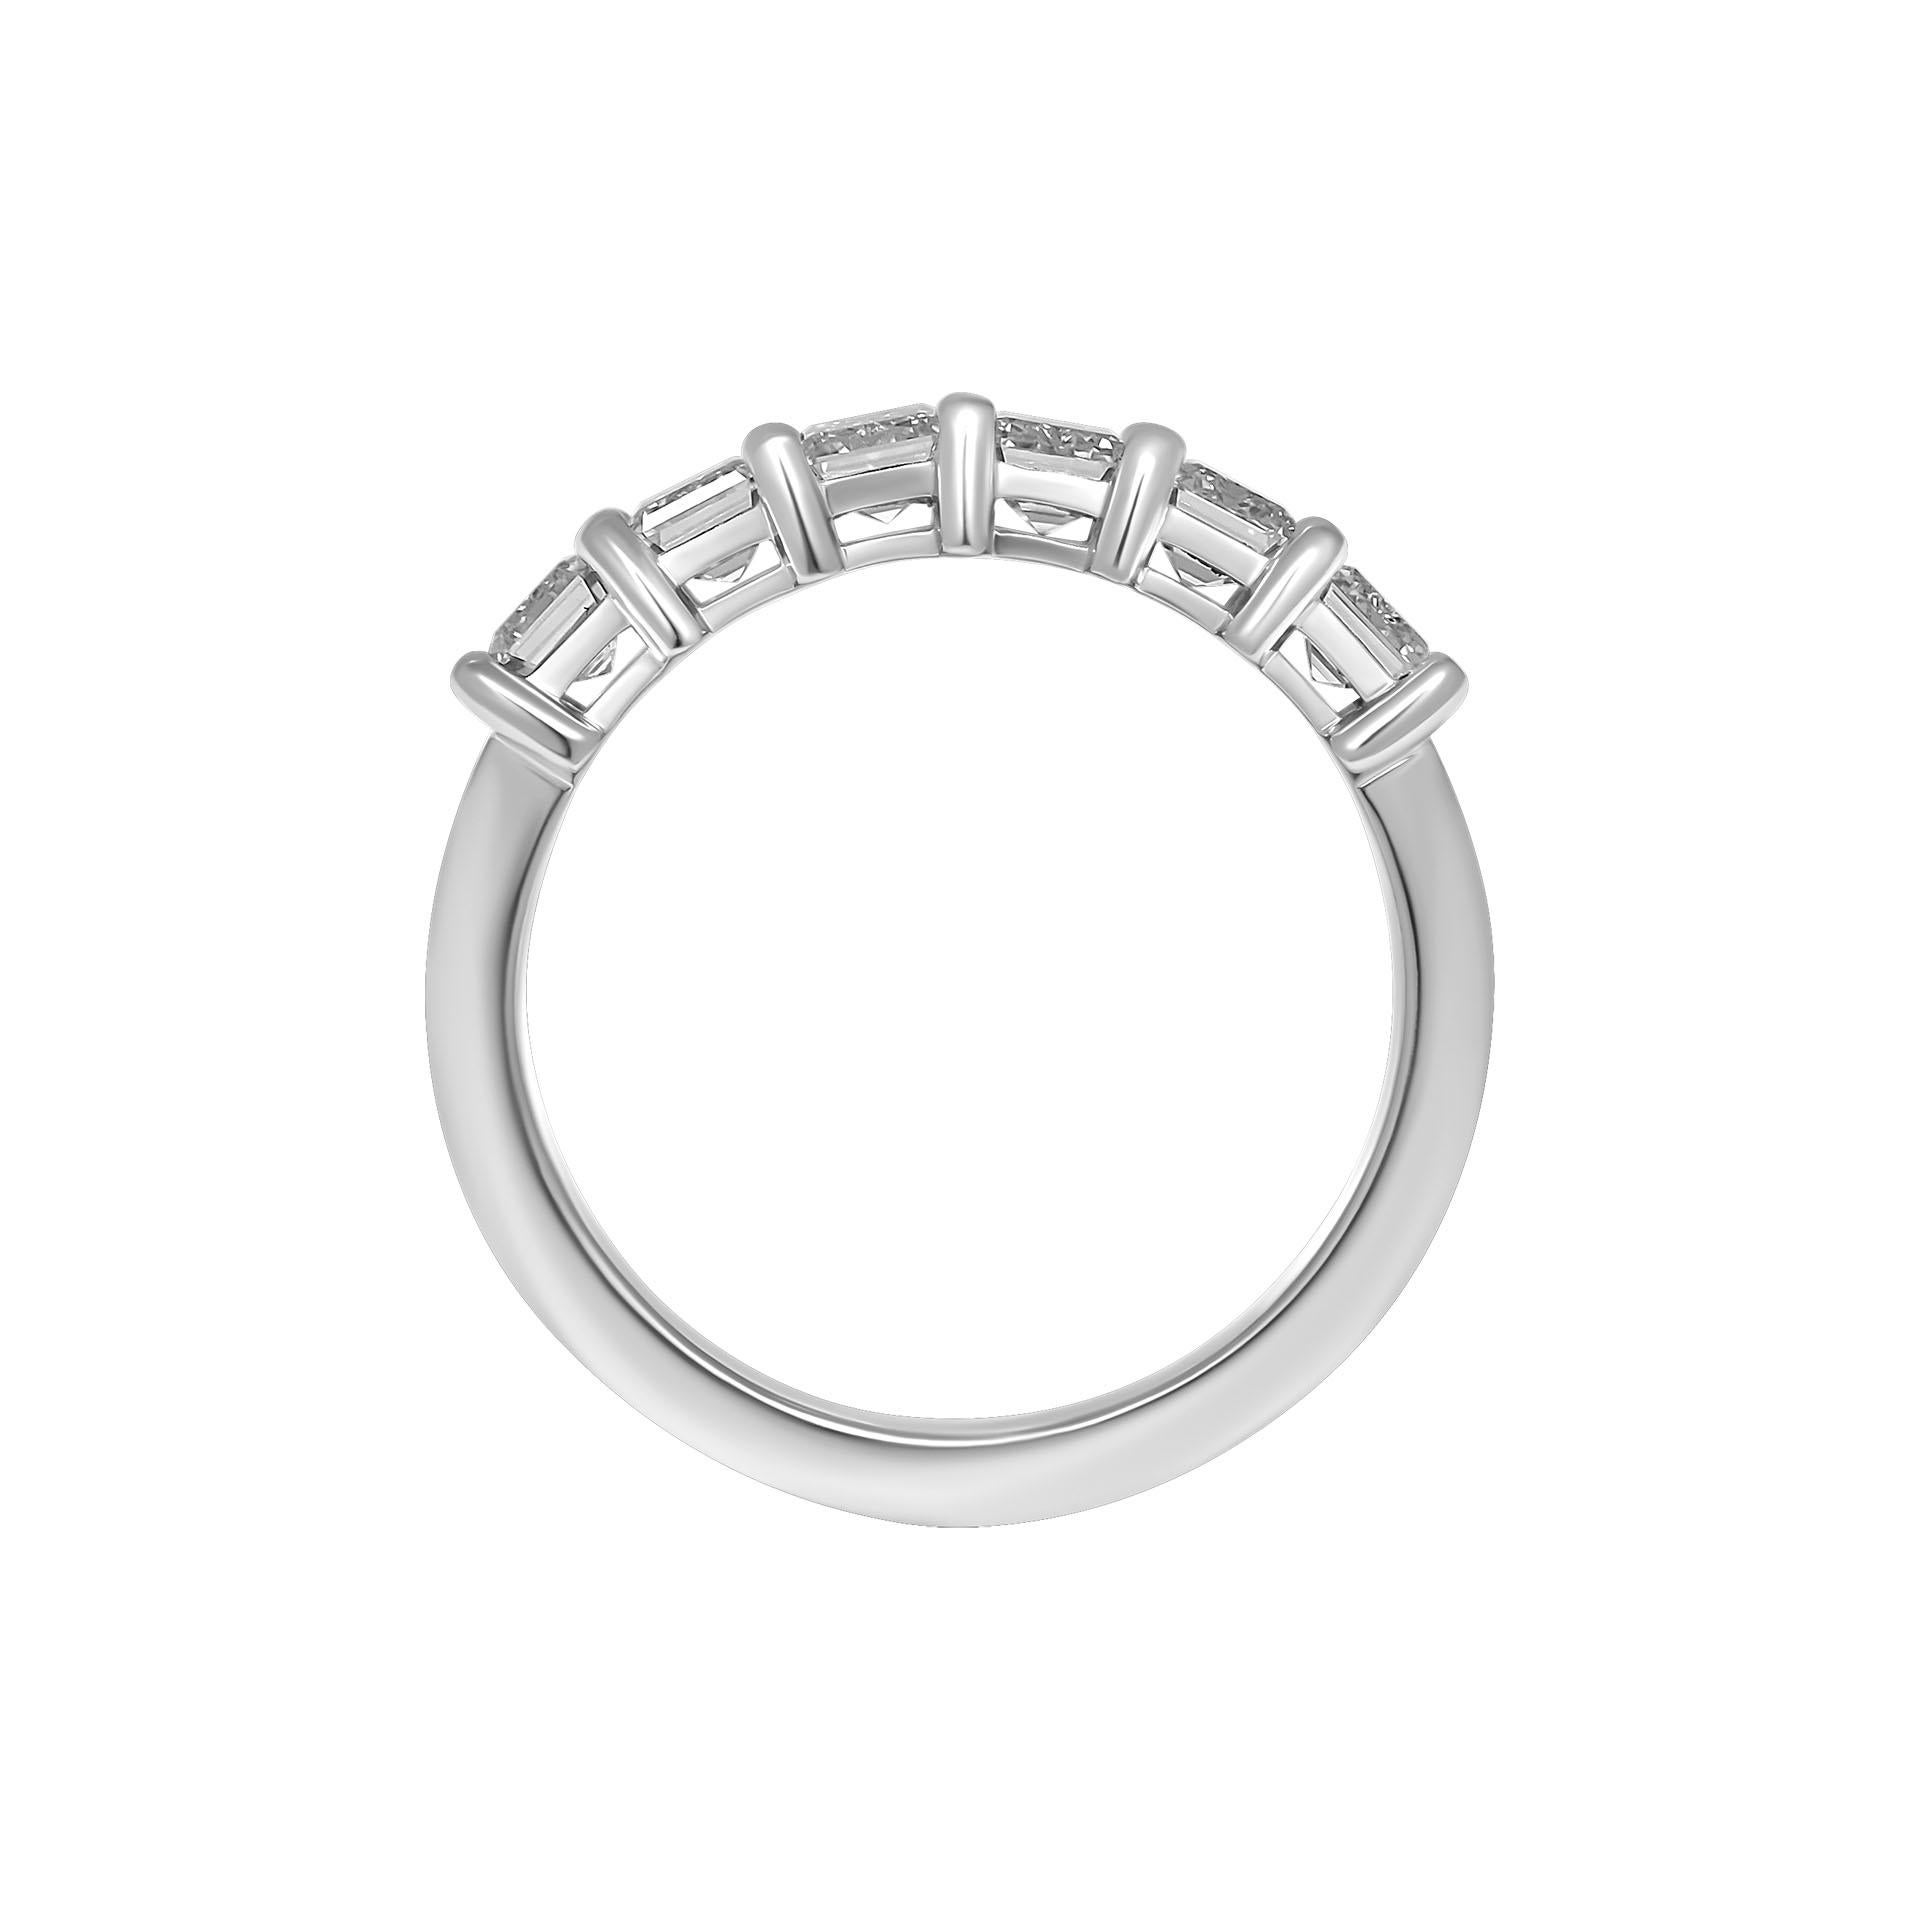 6 ct emerald cut diamond ring